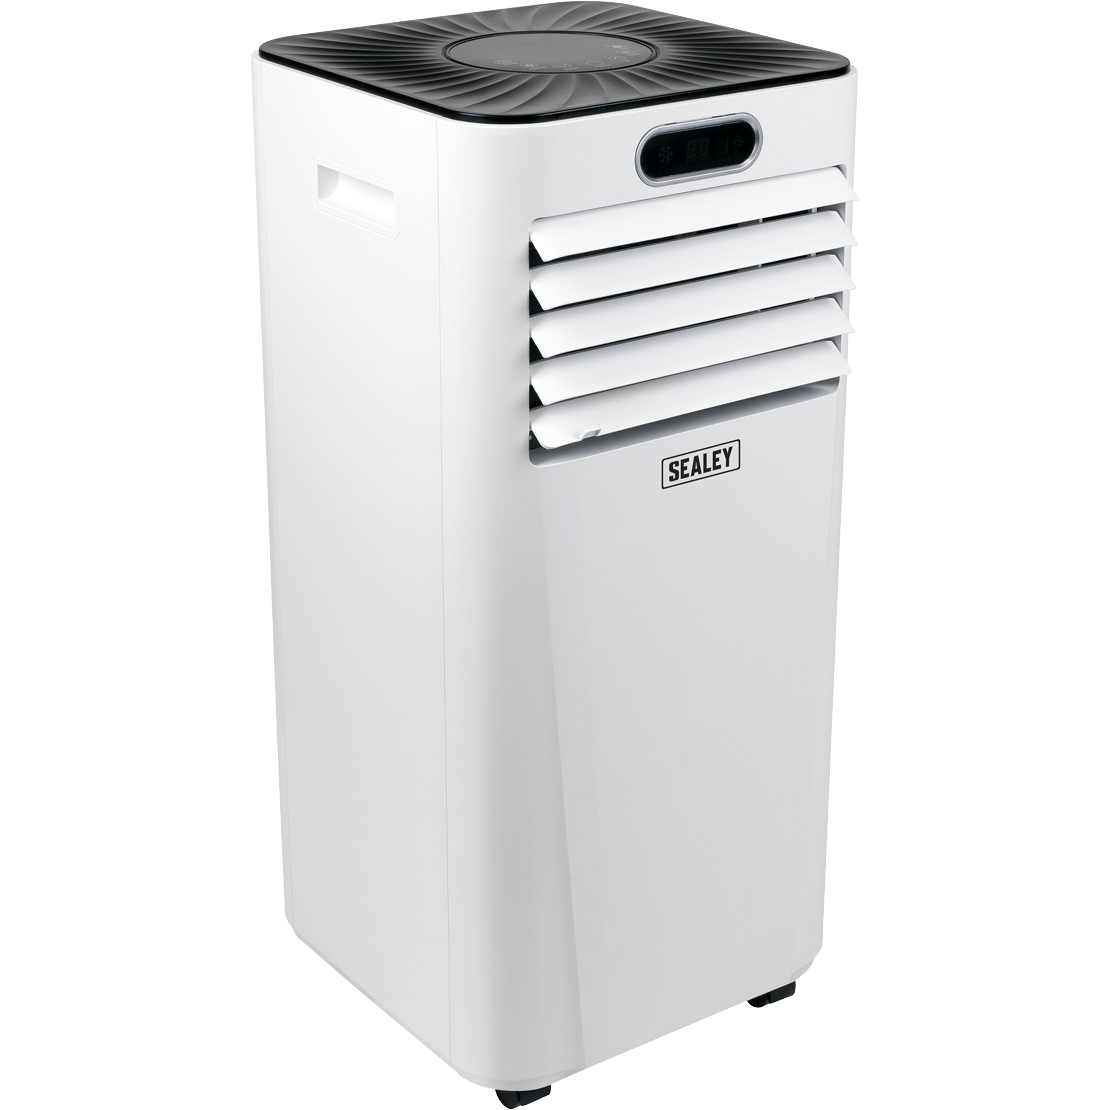 Sealey SAC7000 Portable Air Conditioner, Dehumidifier and Air Cooler 240v